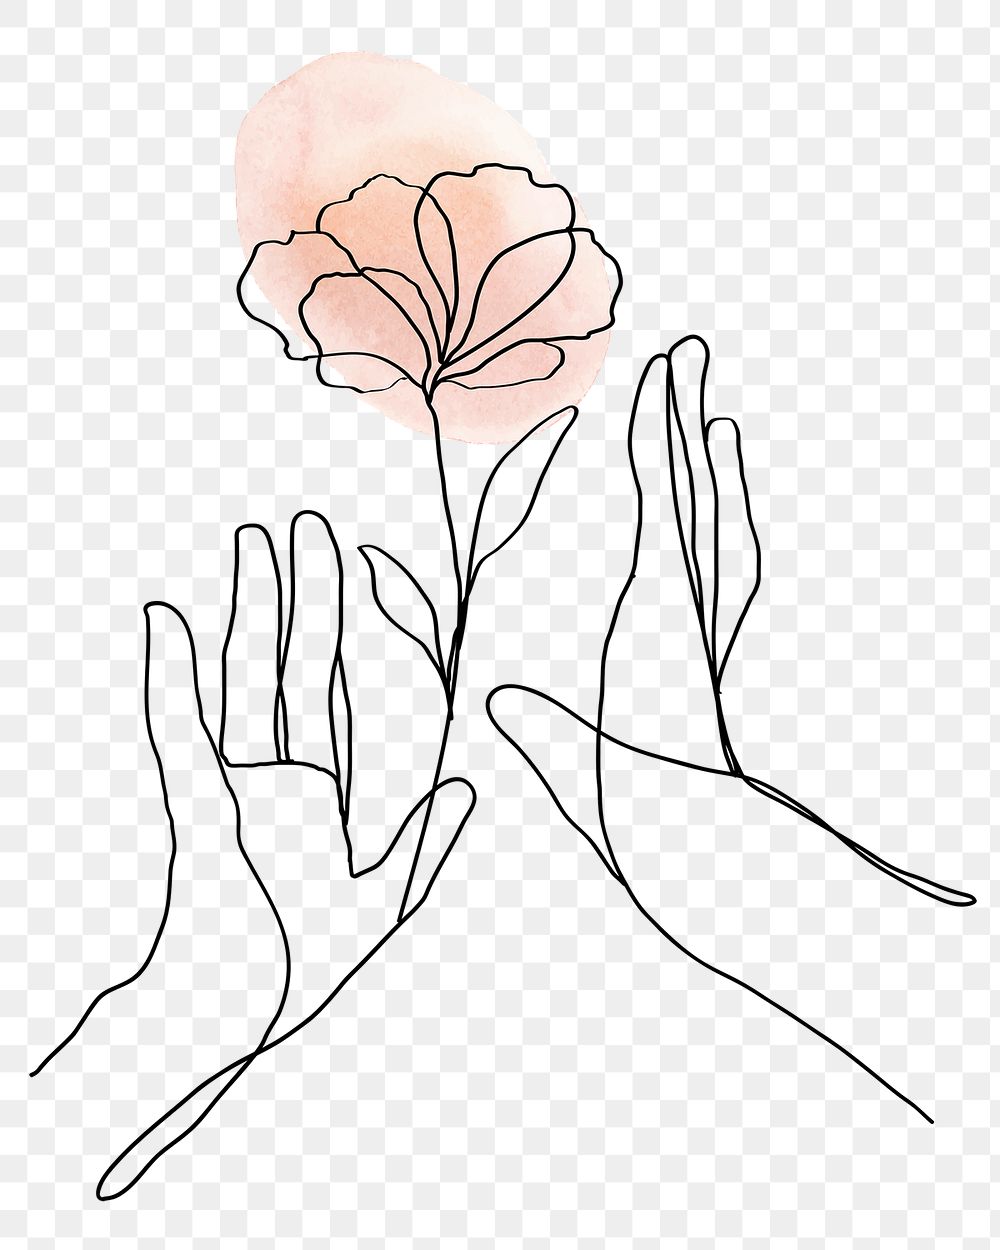 Png hands with flowers pastel orange feminine line art illustration